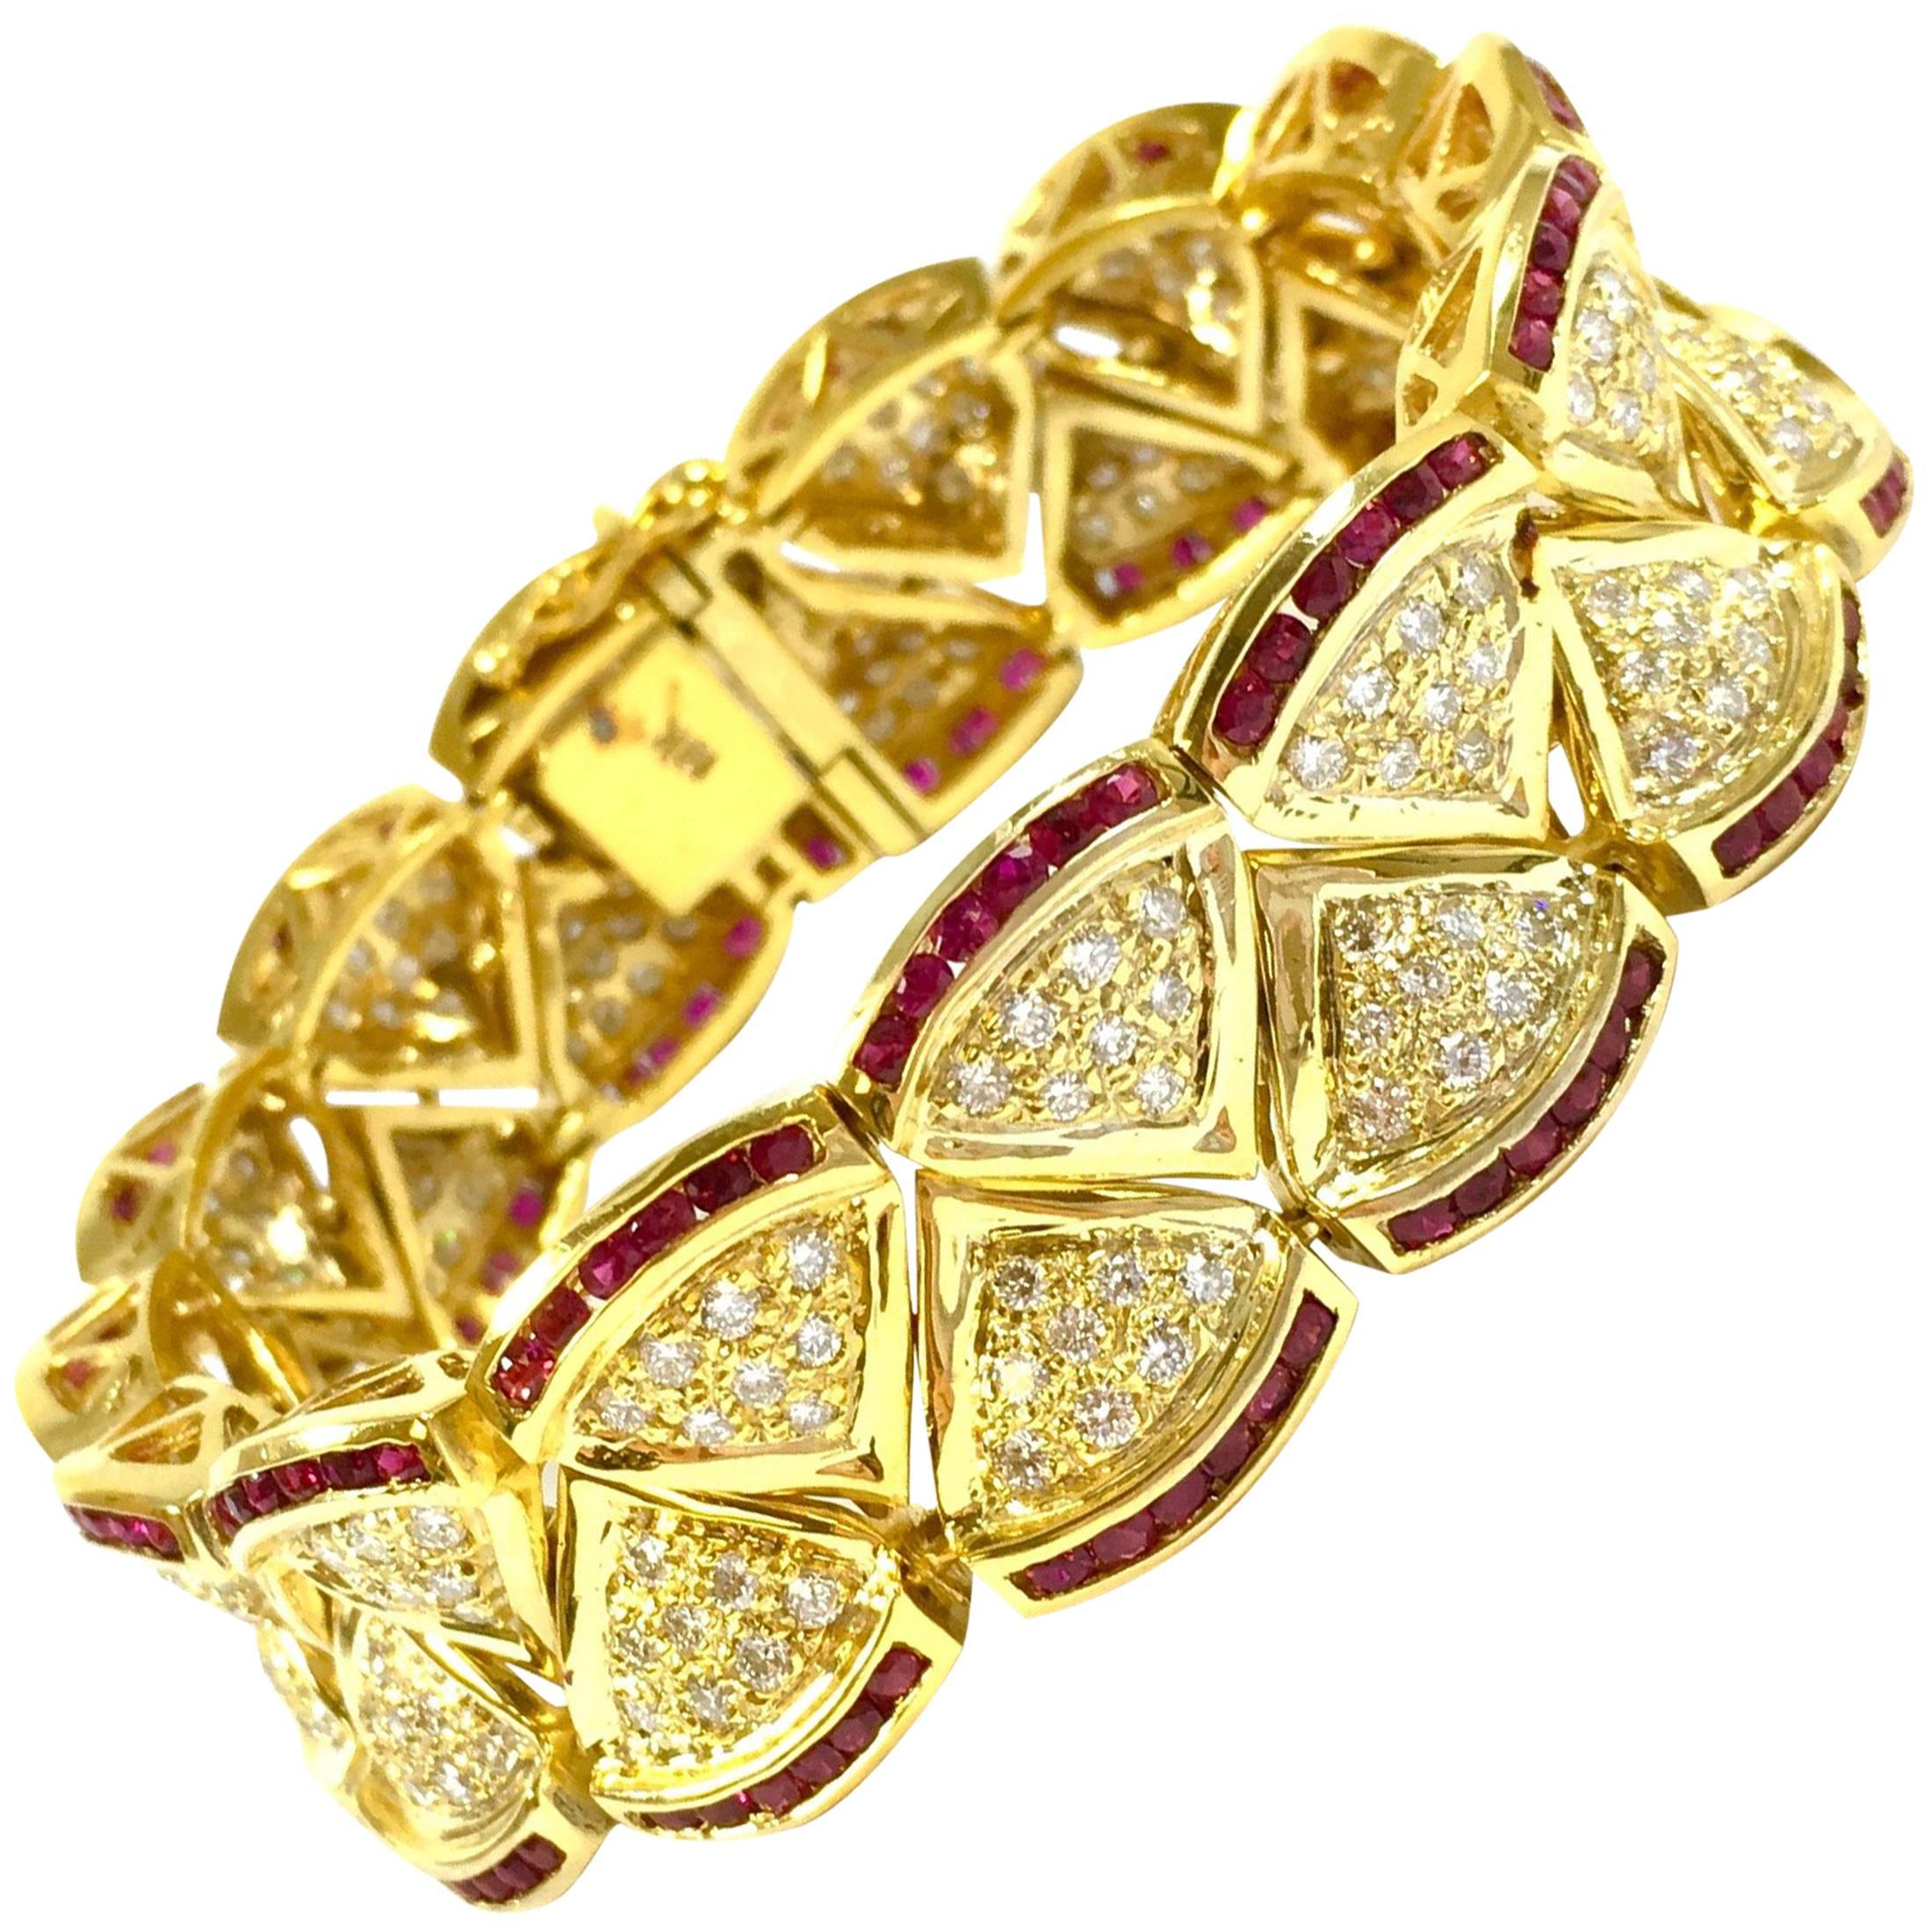 8 Carats Diamonds 5.5 Carats Rubies Scalloped Gold Bracelet For Sale